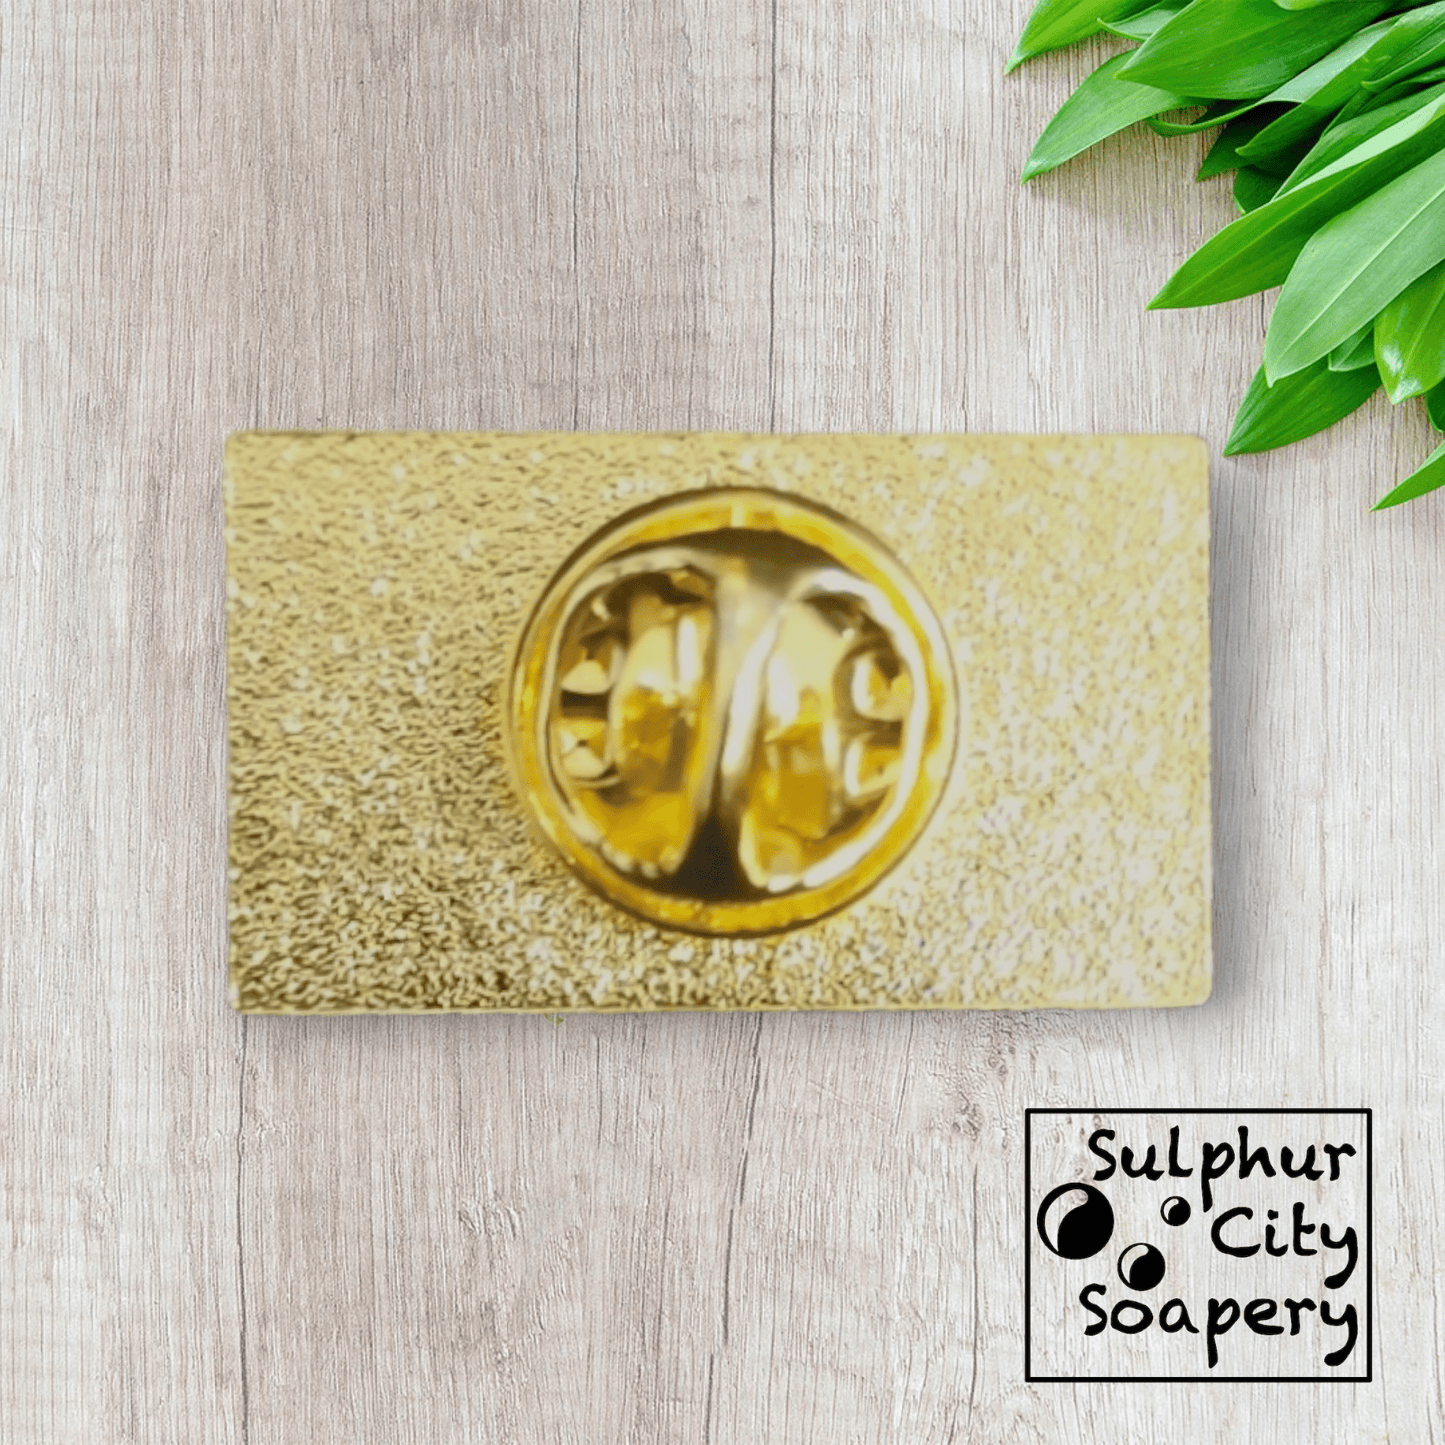 Sulphur City Soapery pronoun pin Pronoun pin in black and gold -  She / Her